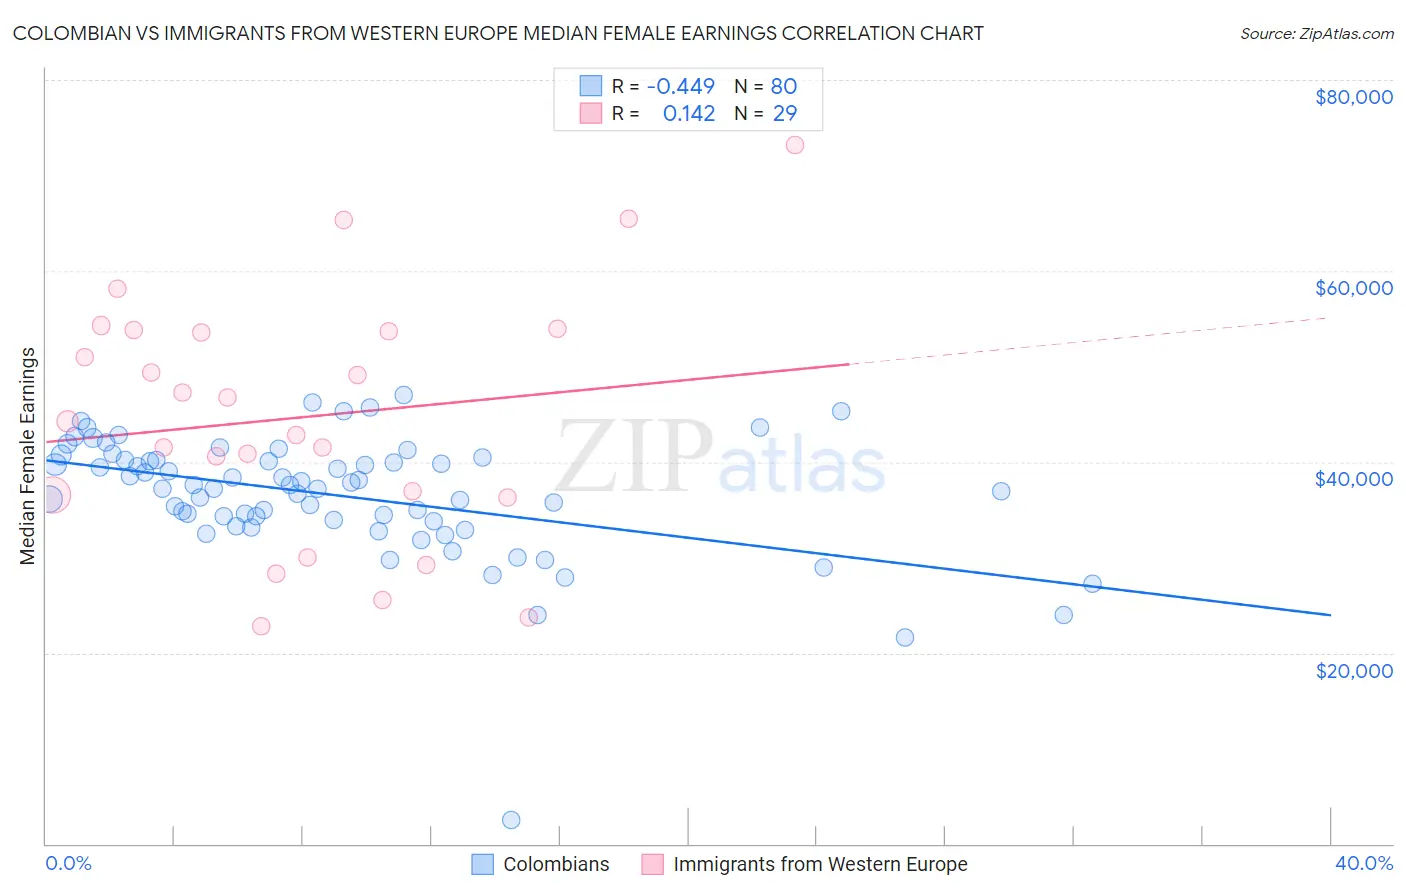 Colombian vs Immigrants from Western Europe Median Female Earnings